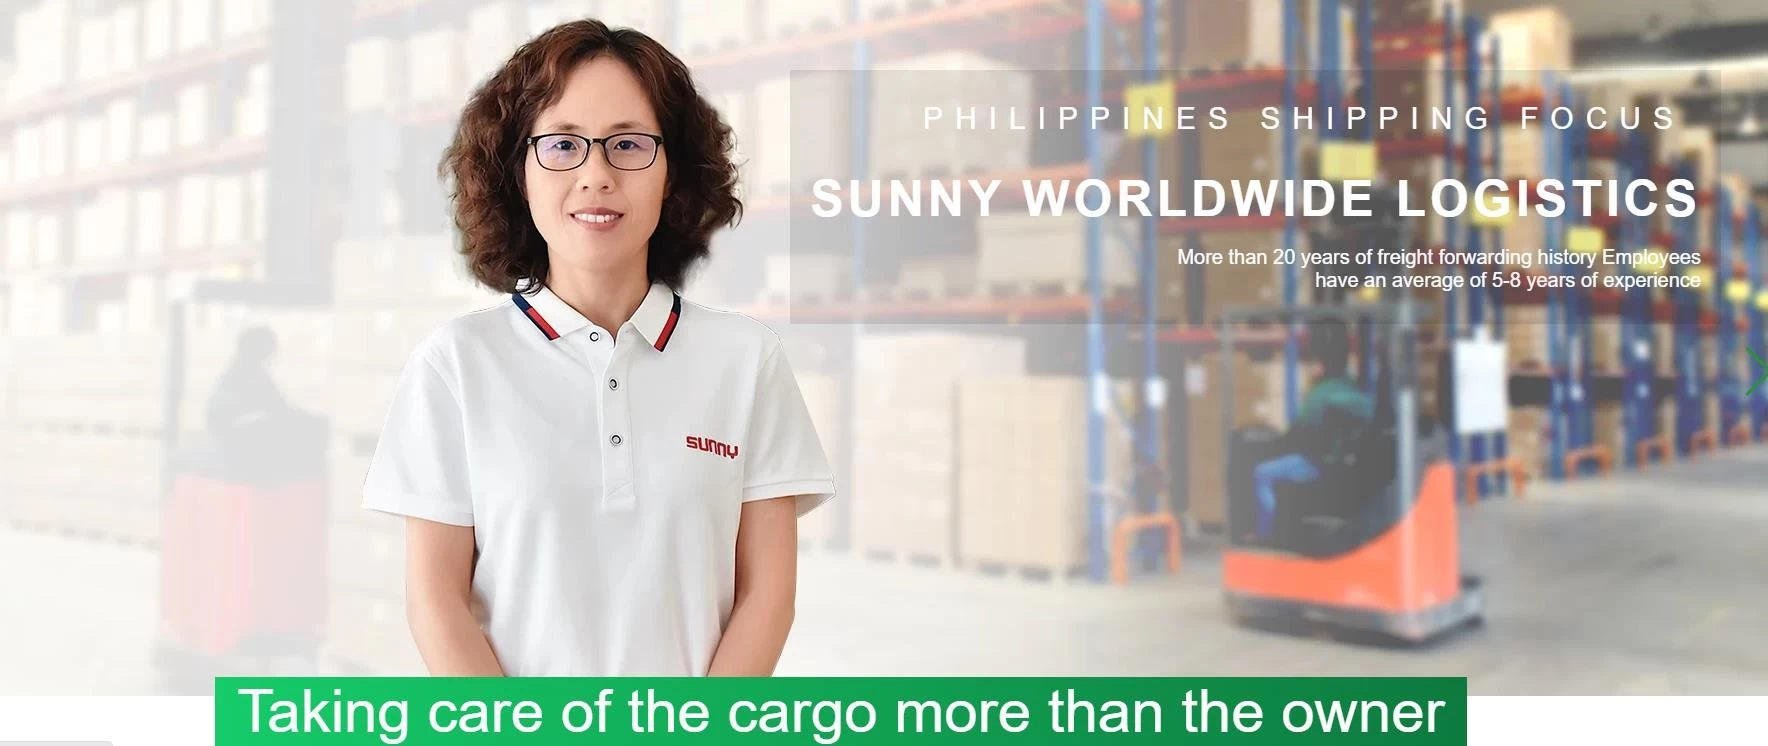 The help of Sunny worldwide logistics training